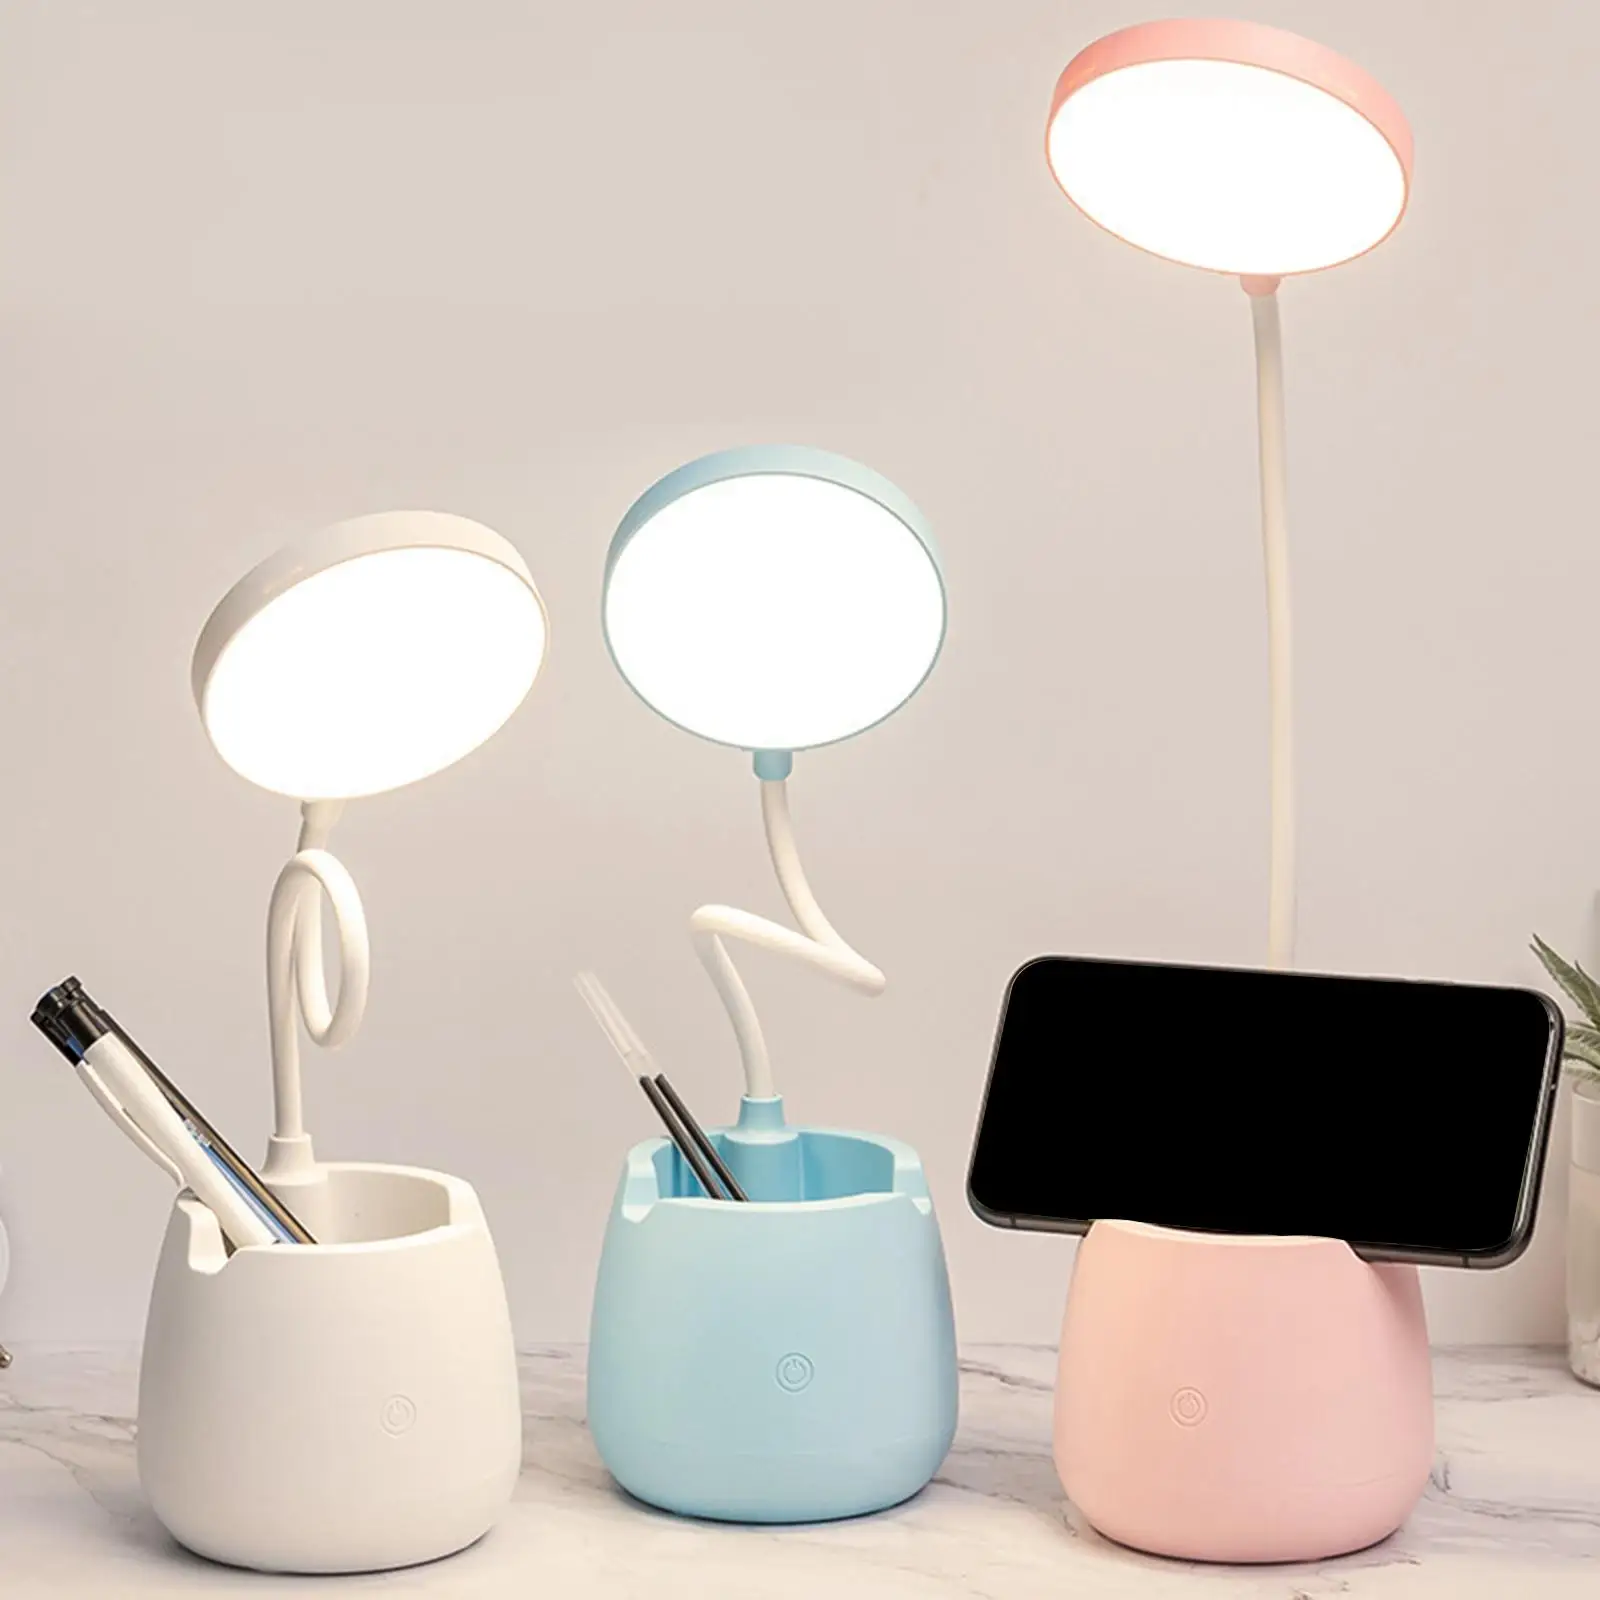 LED Desk Lamp with Pen Holder Adjustable Color Temperature Desk Light USB Night Light with USB Charging Port 3 in 1 for Reading